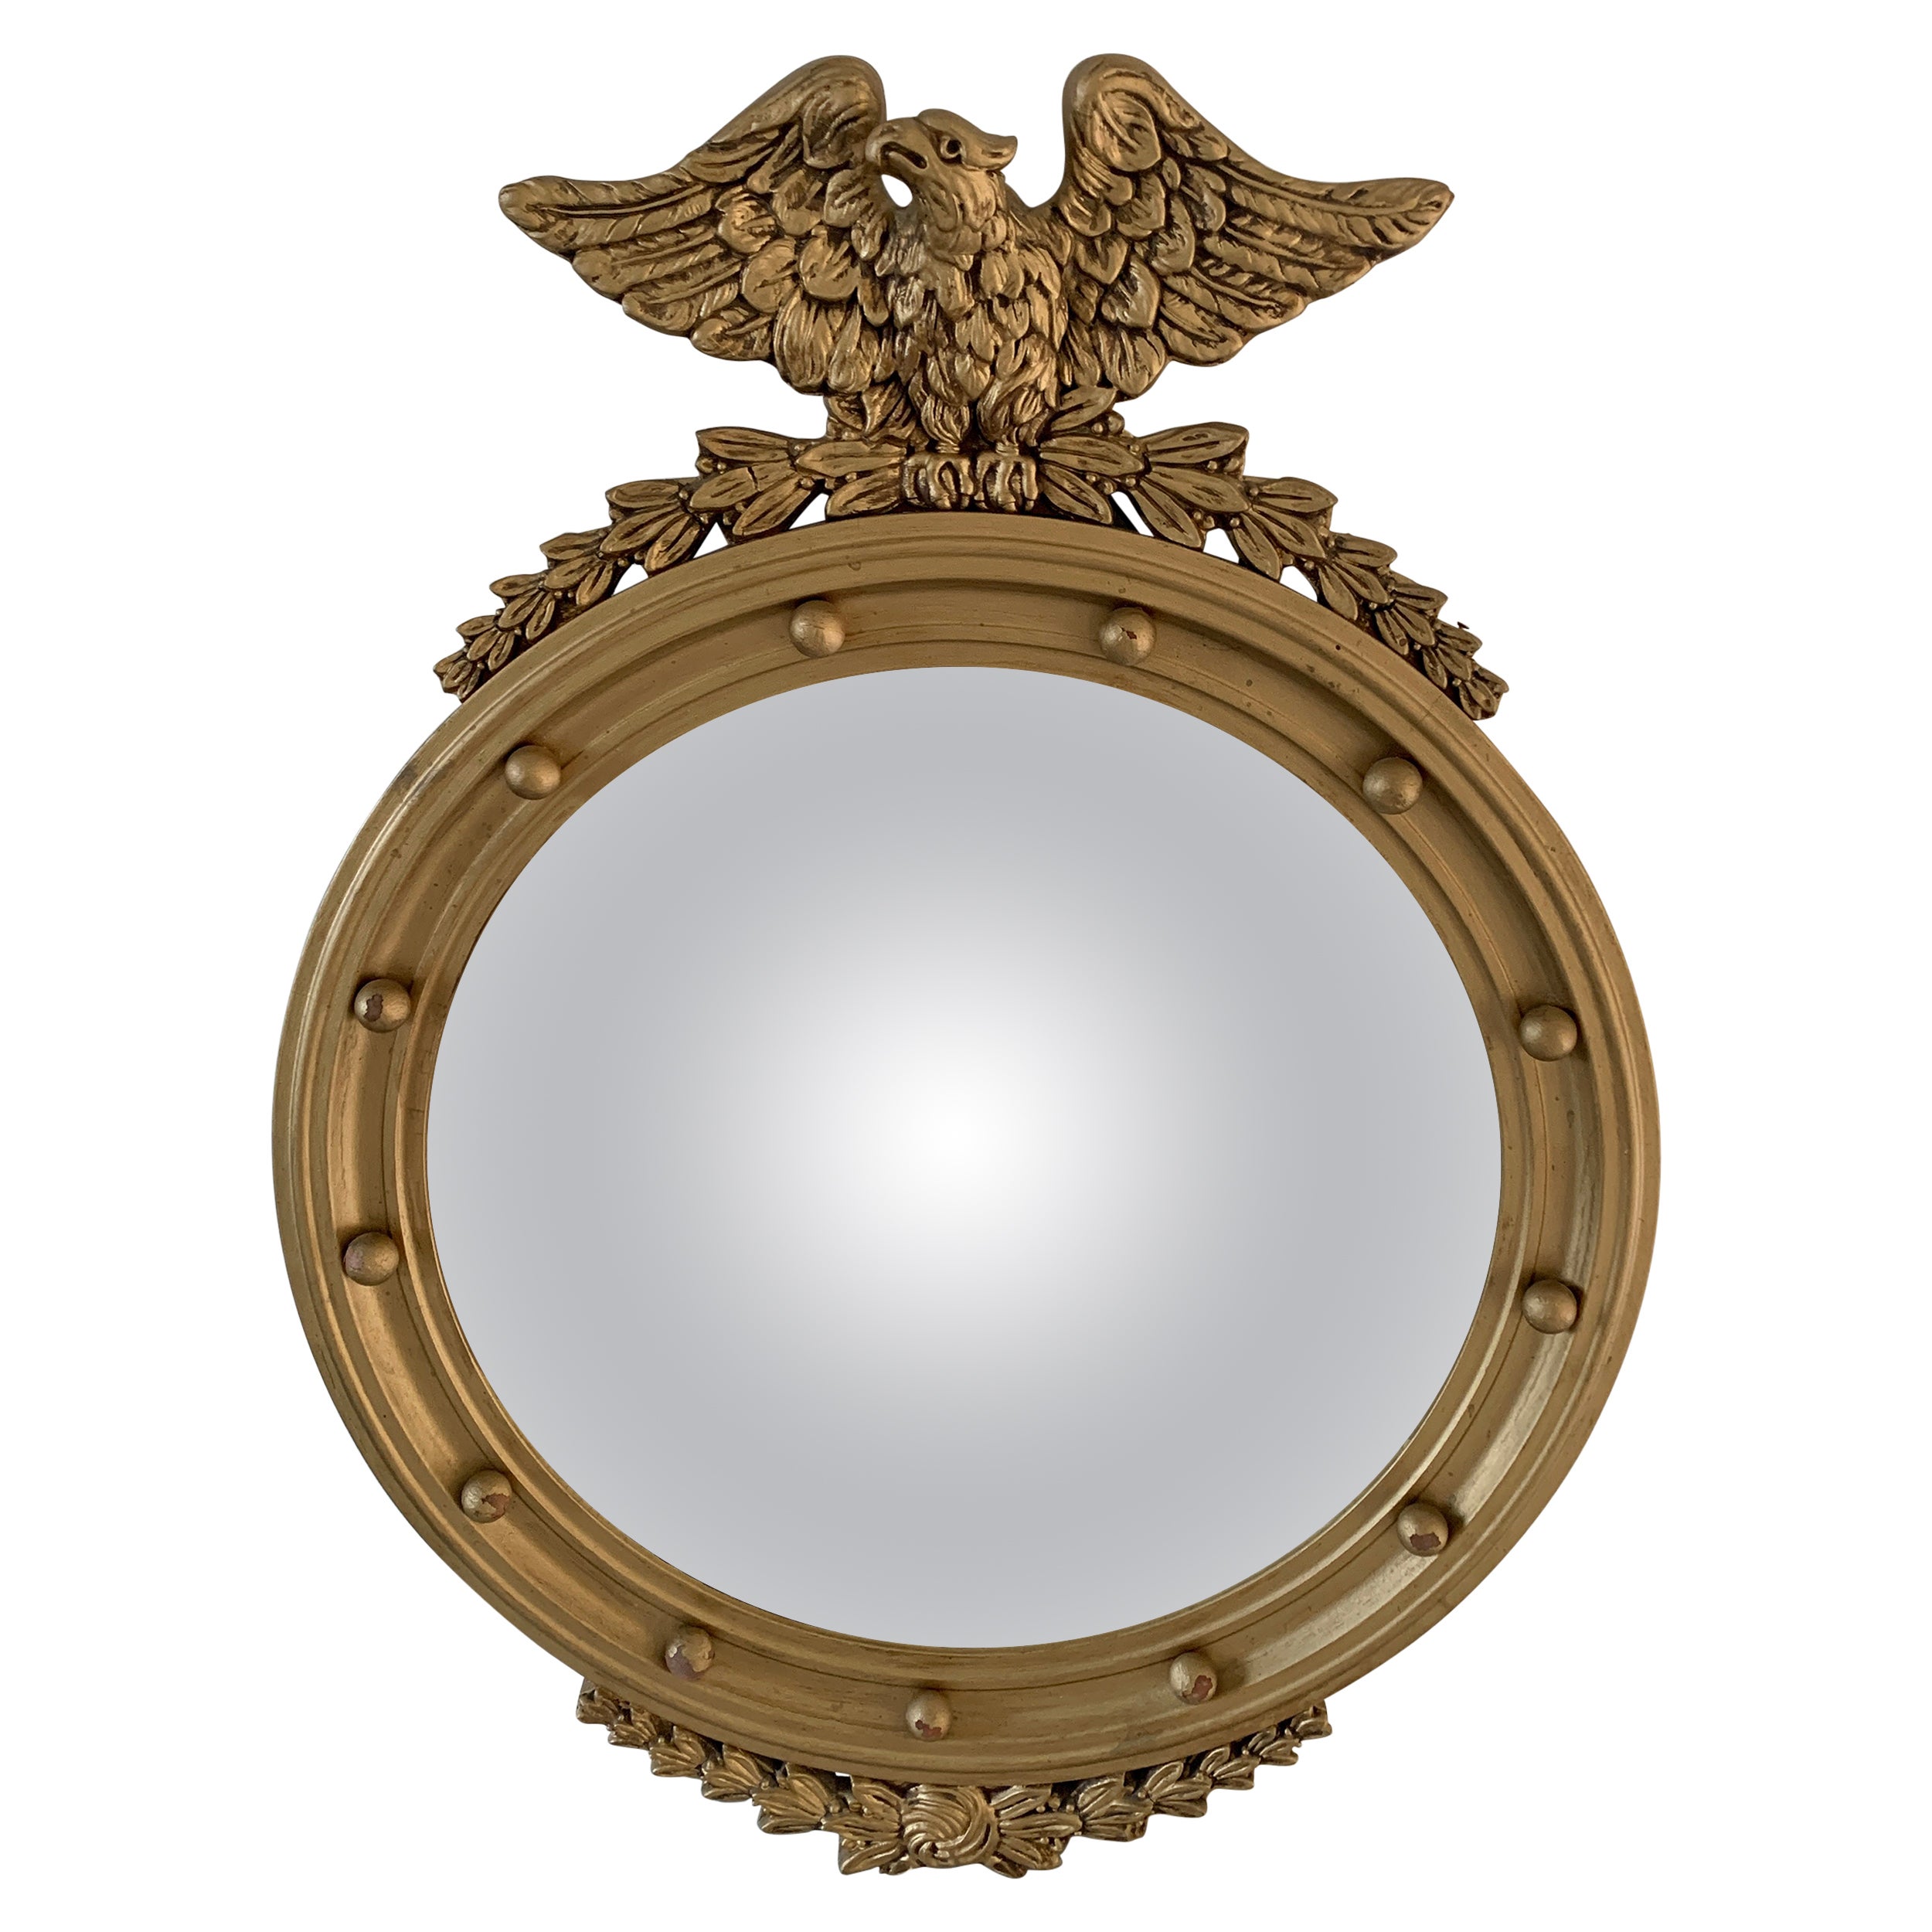 Antique 19th Century American Federal Giltwood Eagle Bullseye Convex Mirror